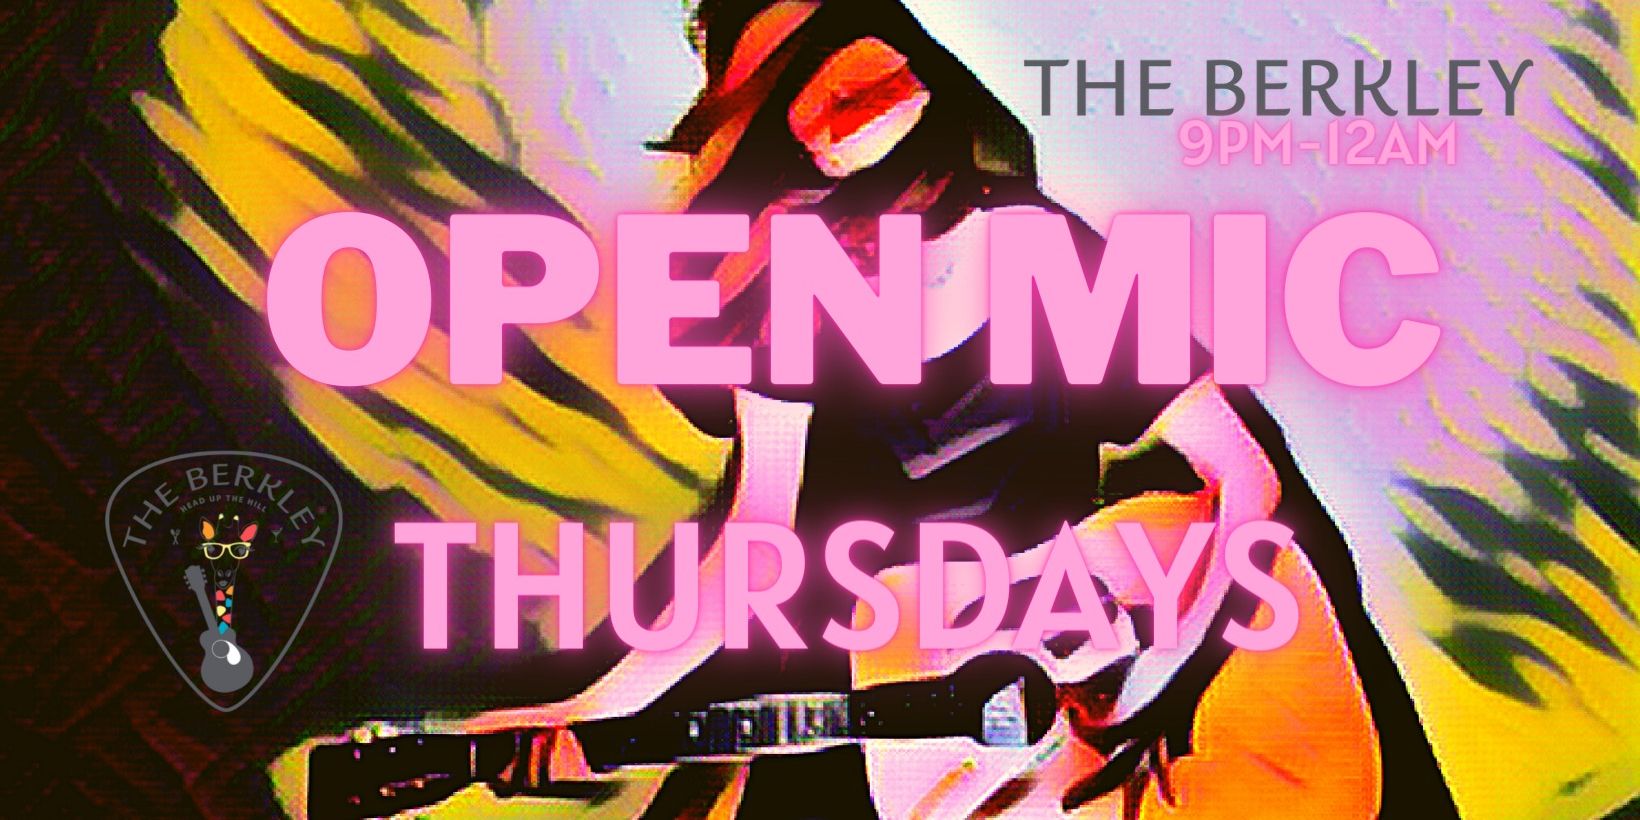 Open Mic Thursdays at The Berkley promotional image